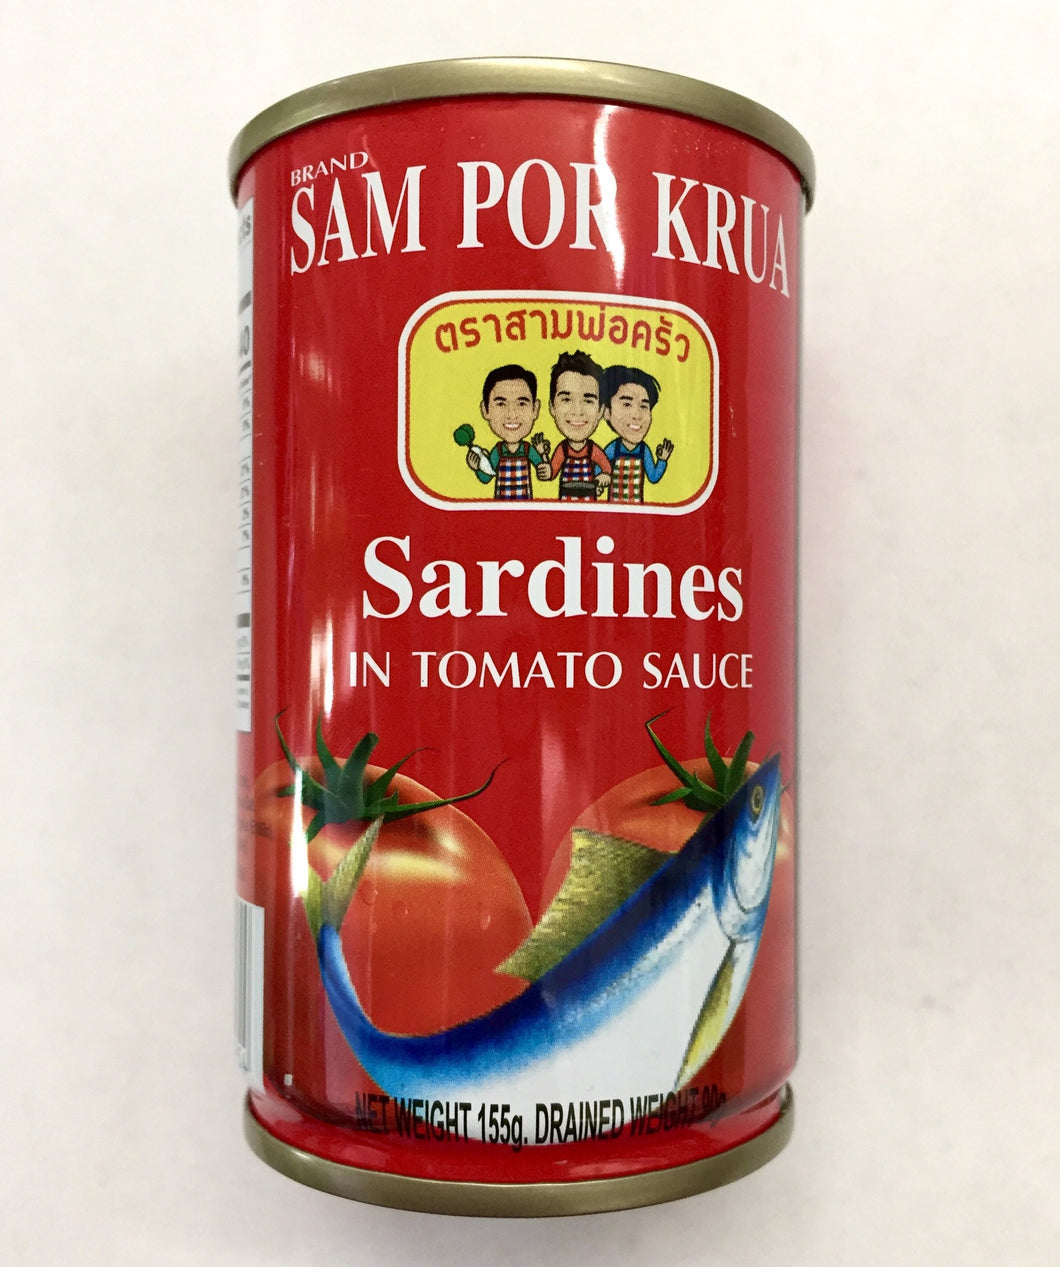 Samporkrua Sardines in Tomato Sauce ปลาซาร์ดีนในซอสมะเขือเทศ